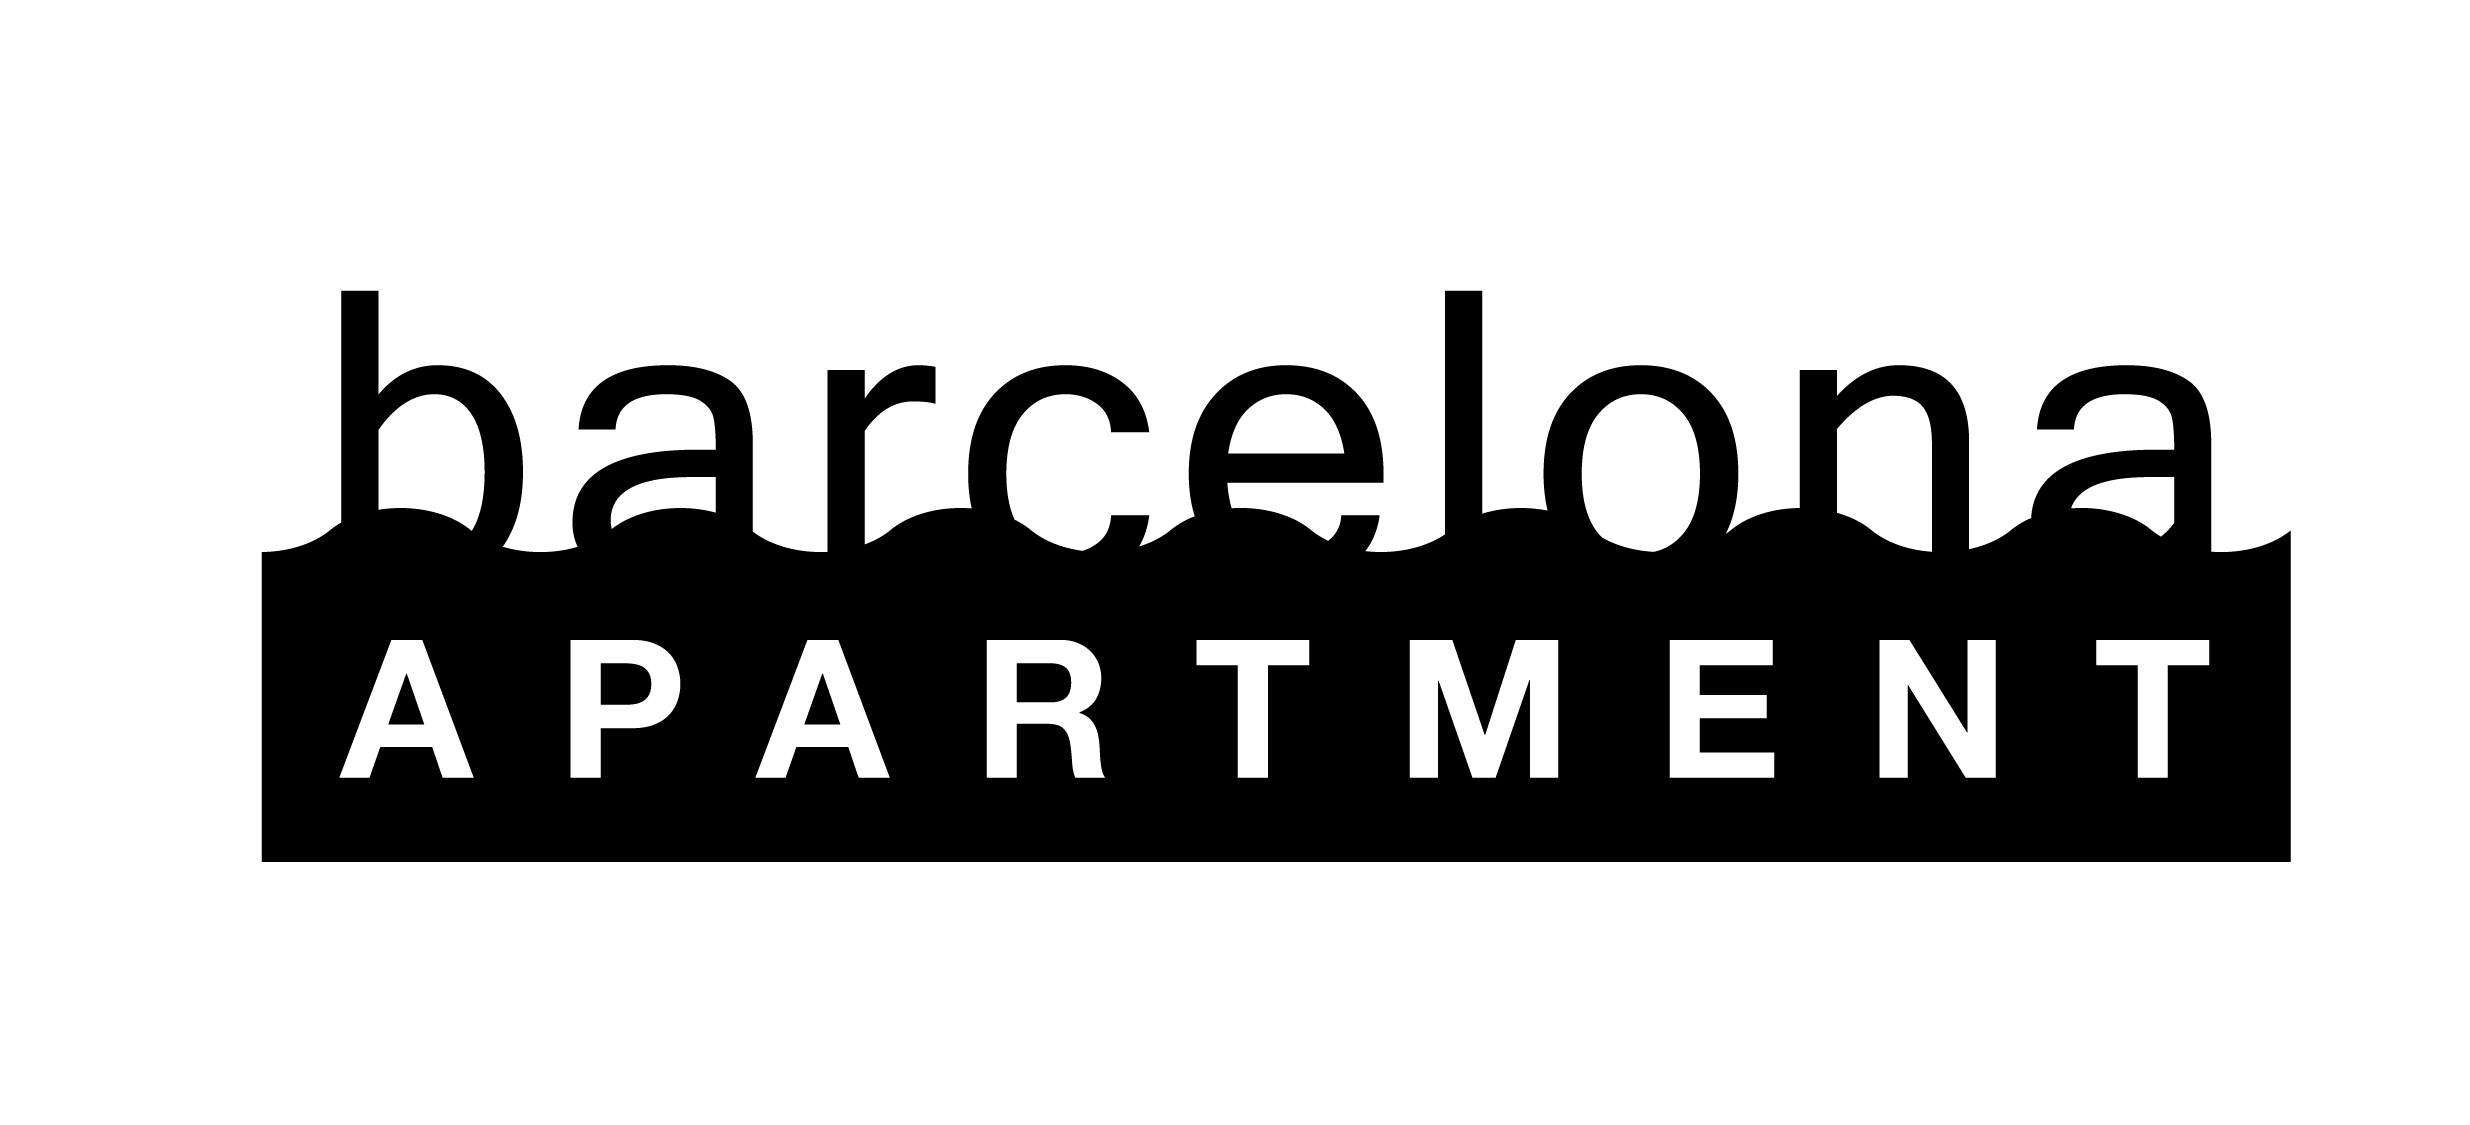 Barcelona Aparment